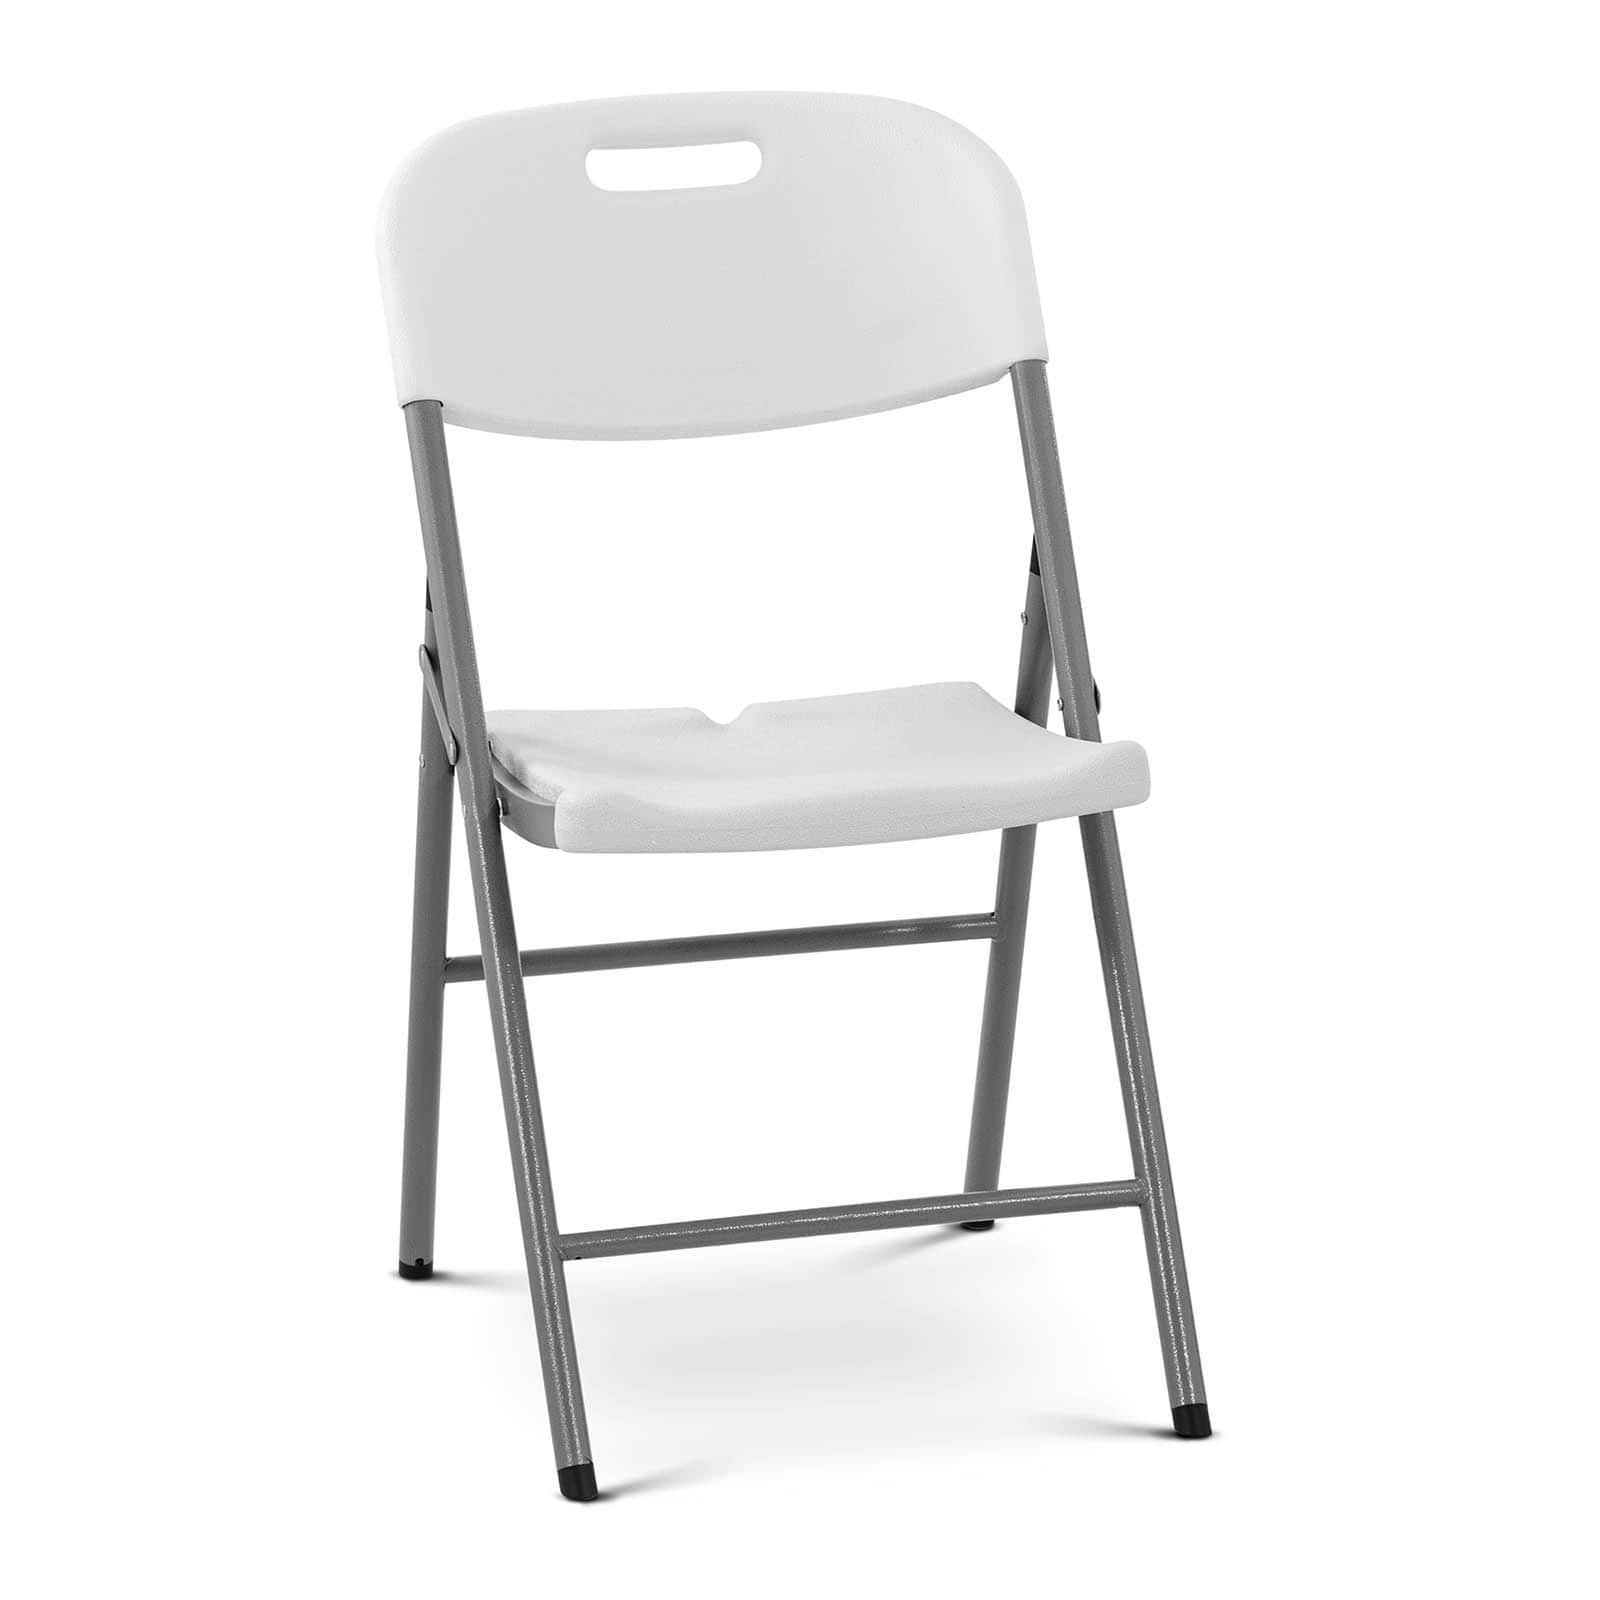 180 Catering Faltstuhl klappbar weiß Stuhl Stahl Klappstuhl Polyethylen Faltstuhl Royal kg